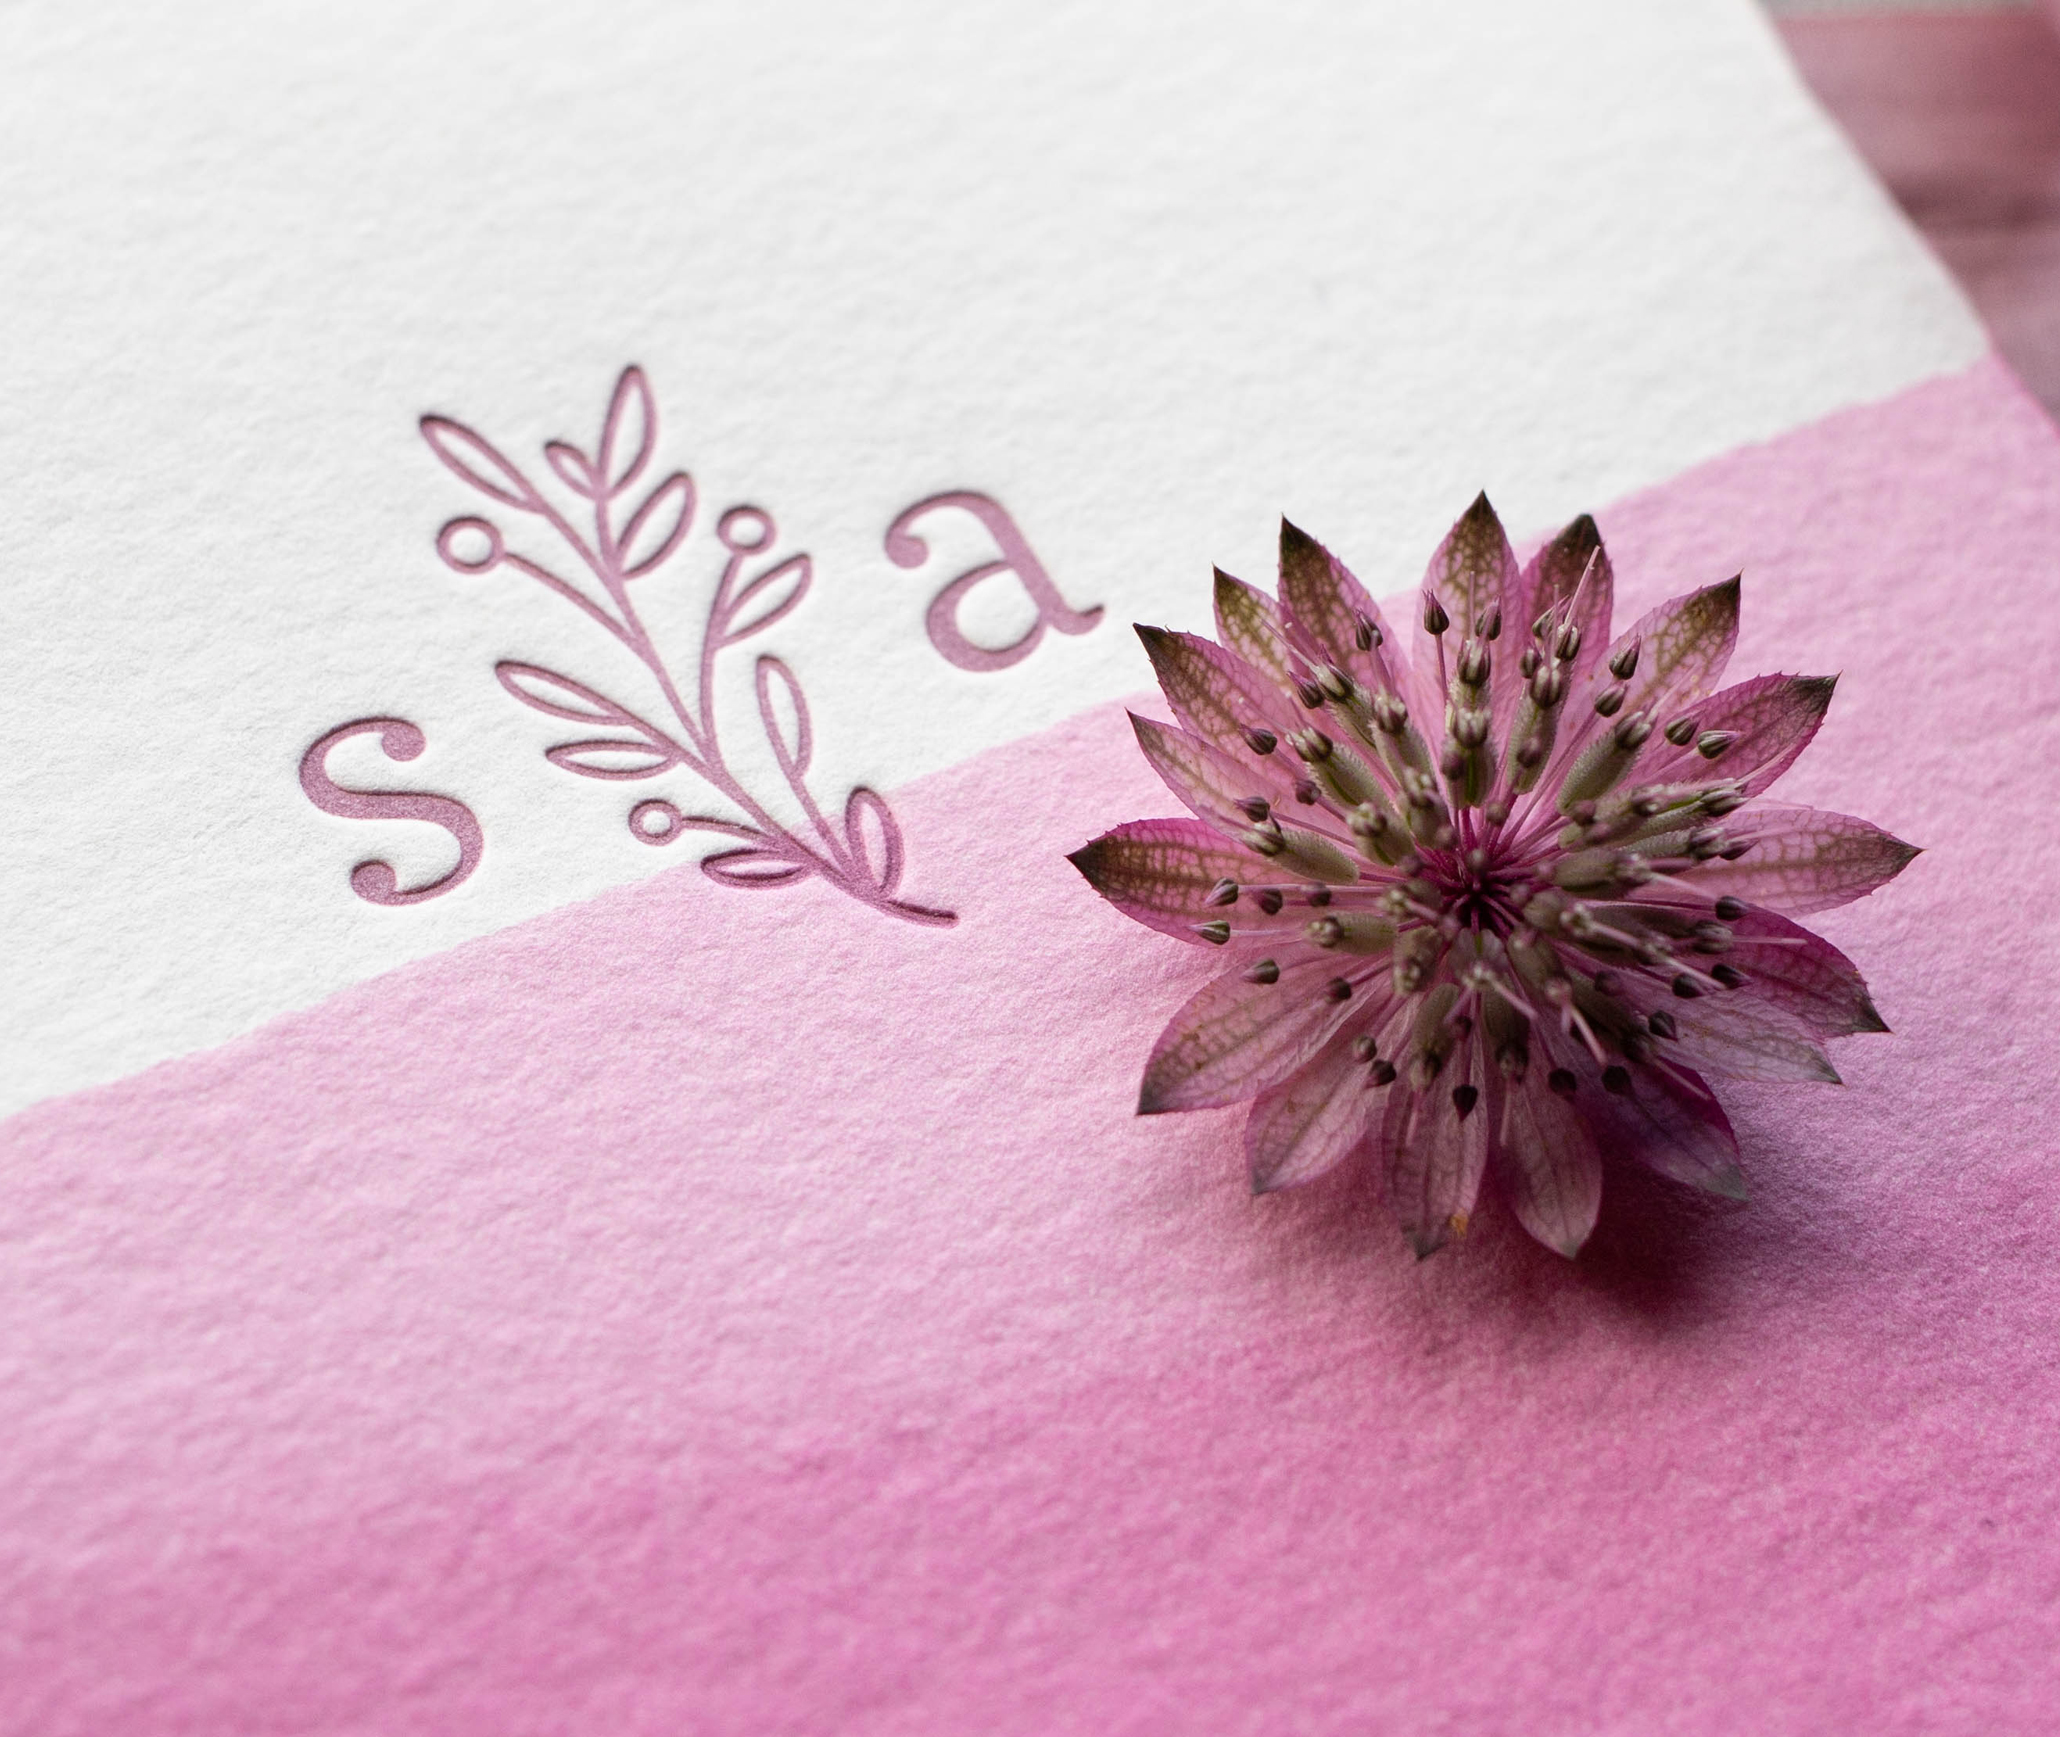 original custom wedding monogram, letterpress printed nature inspired custom wedding invitation design